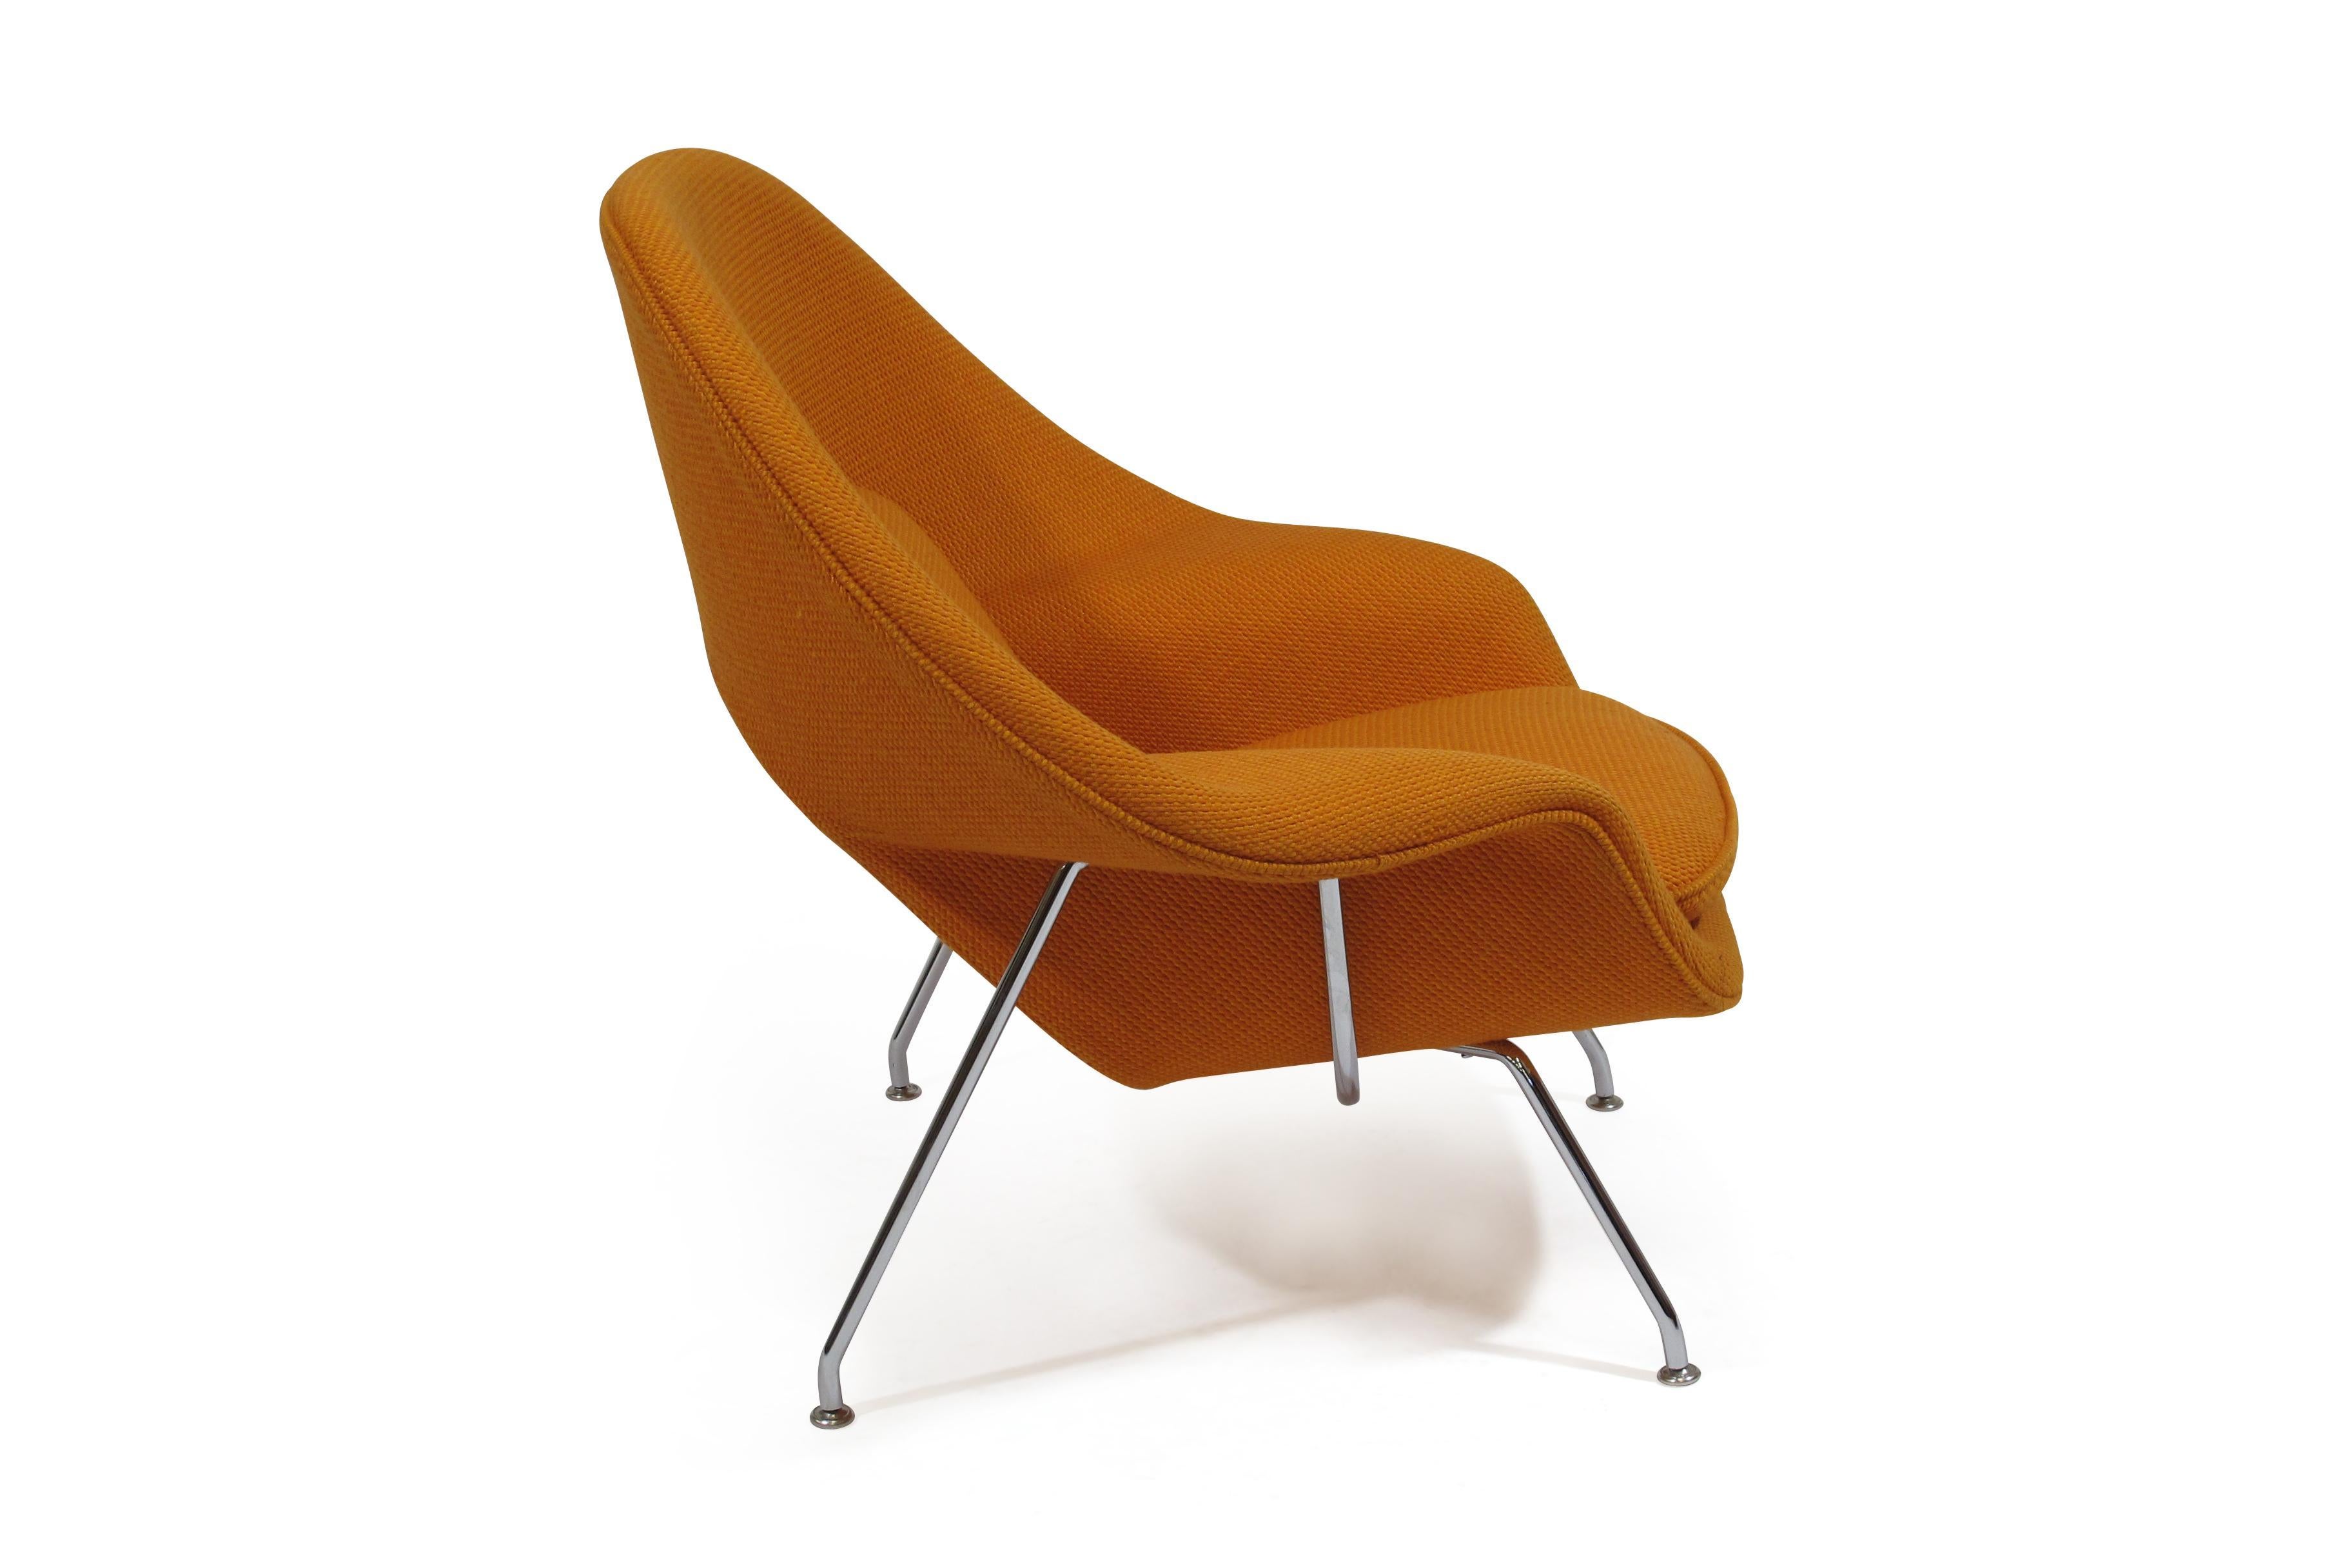 Eero Saarinen for Knoll Medium Womb chair foam covered molded fiberglass upholstered in Knoll CATO orange wool on polished chrome legs.